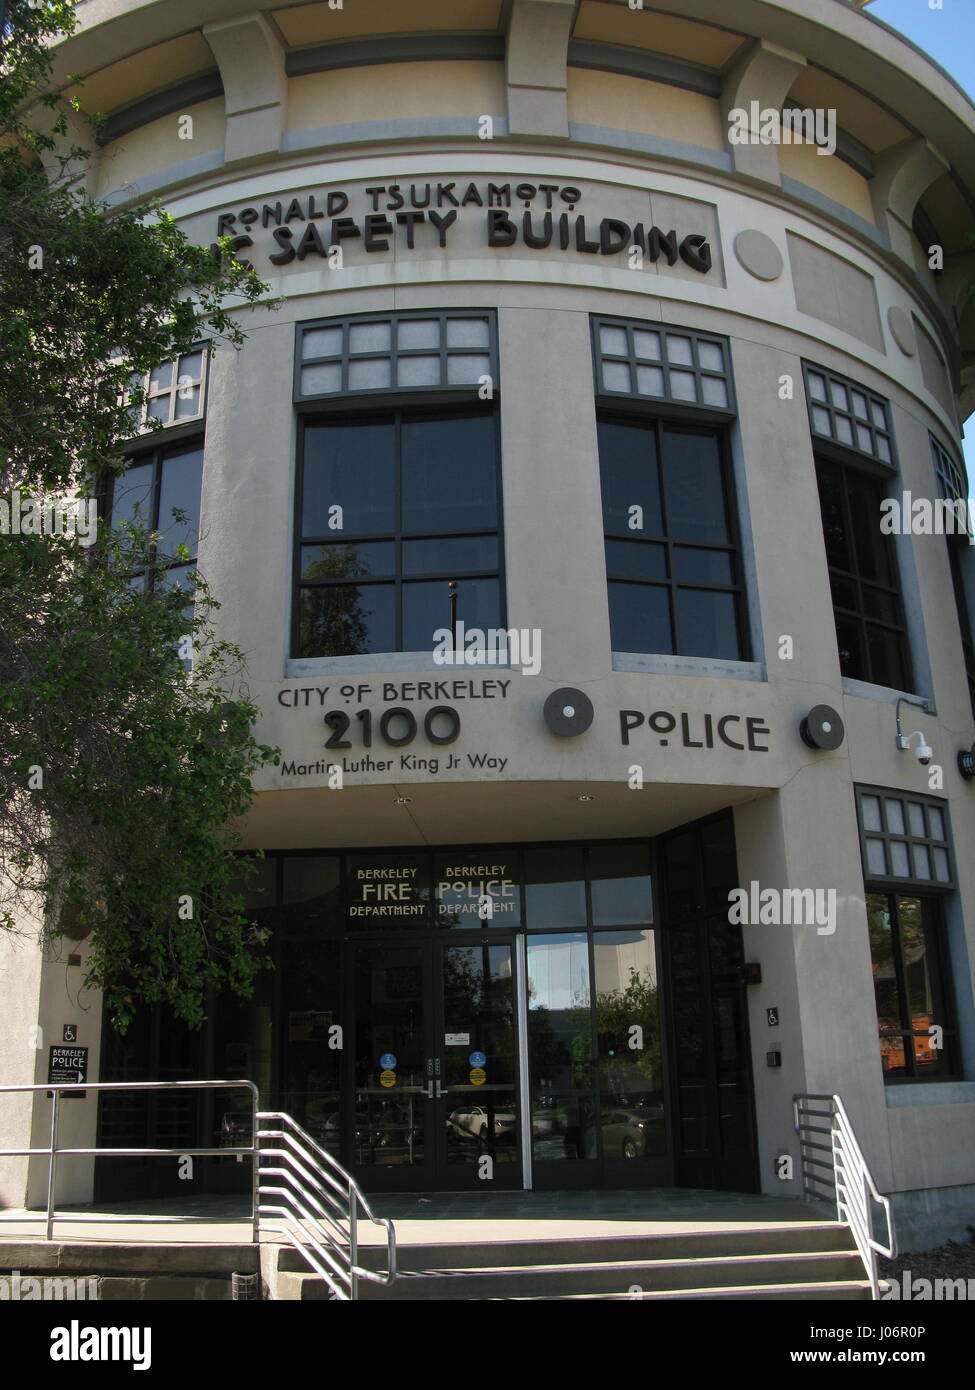 Ronald Tuskamoto Public Safety Building, Martin Luther King jnr Way, Berkeley, California Stock Photo